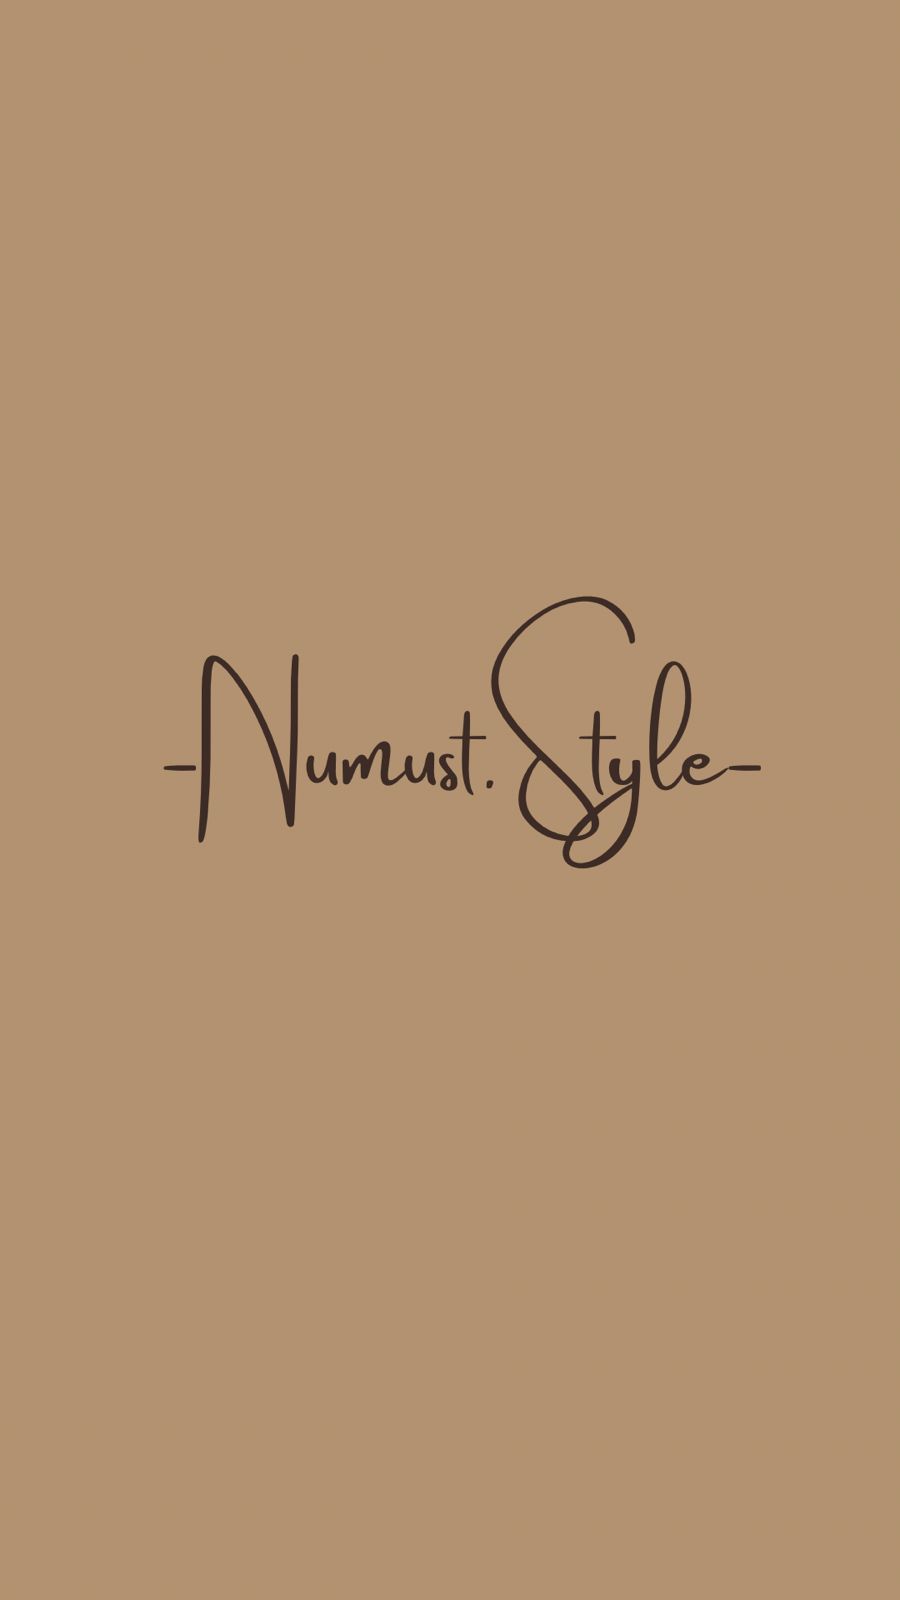 Numust.style